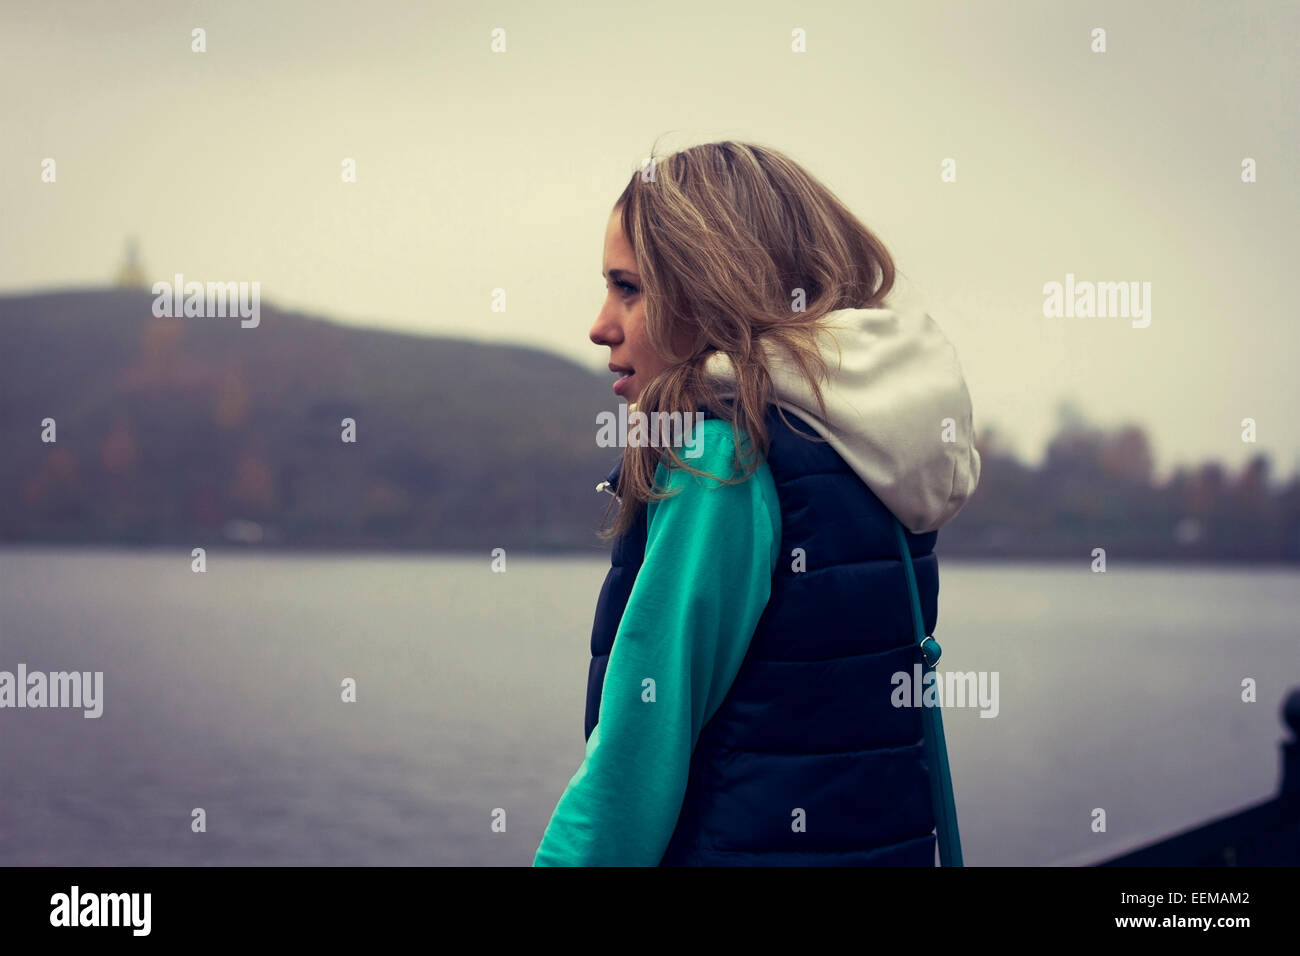 Caucasian woman admiring scenic lake view Stock Photo